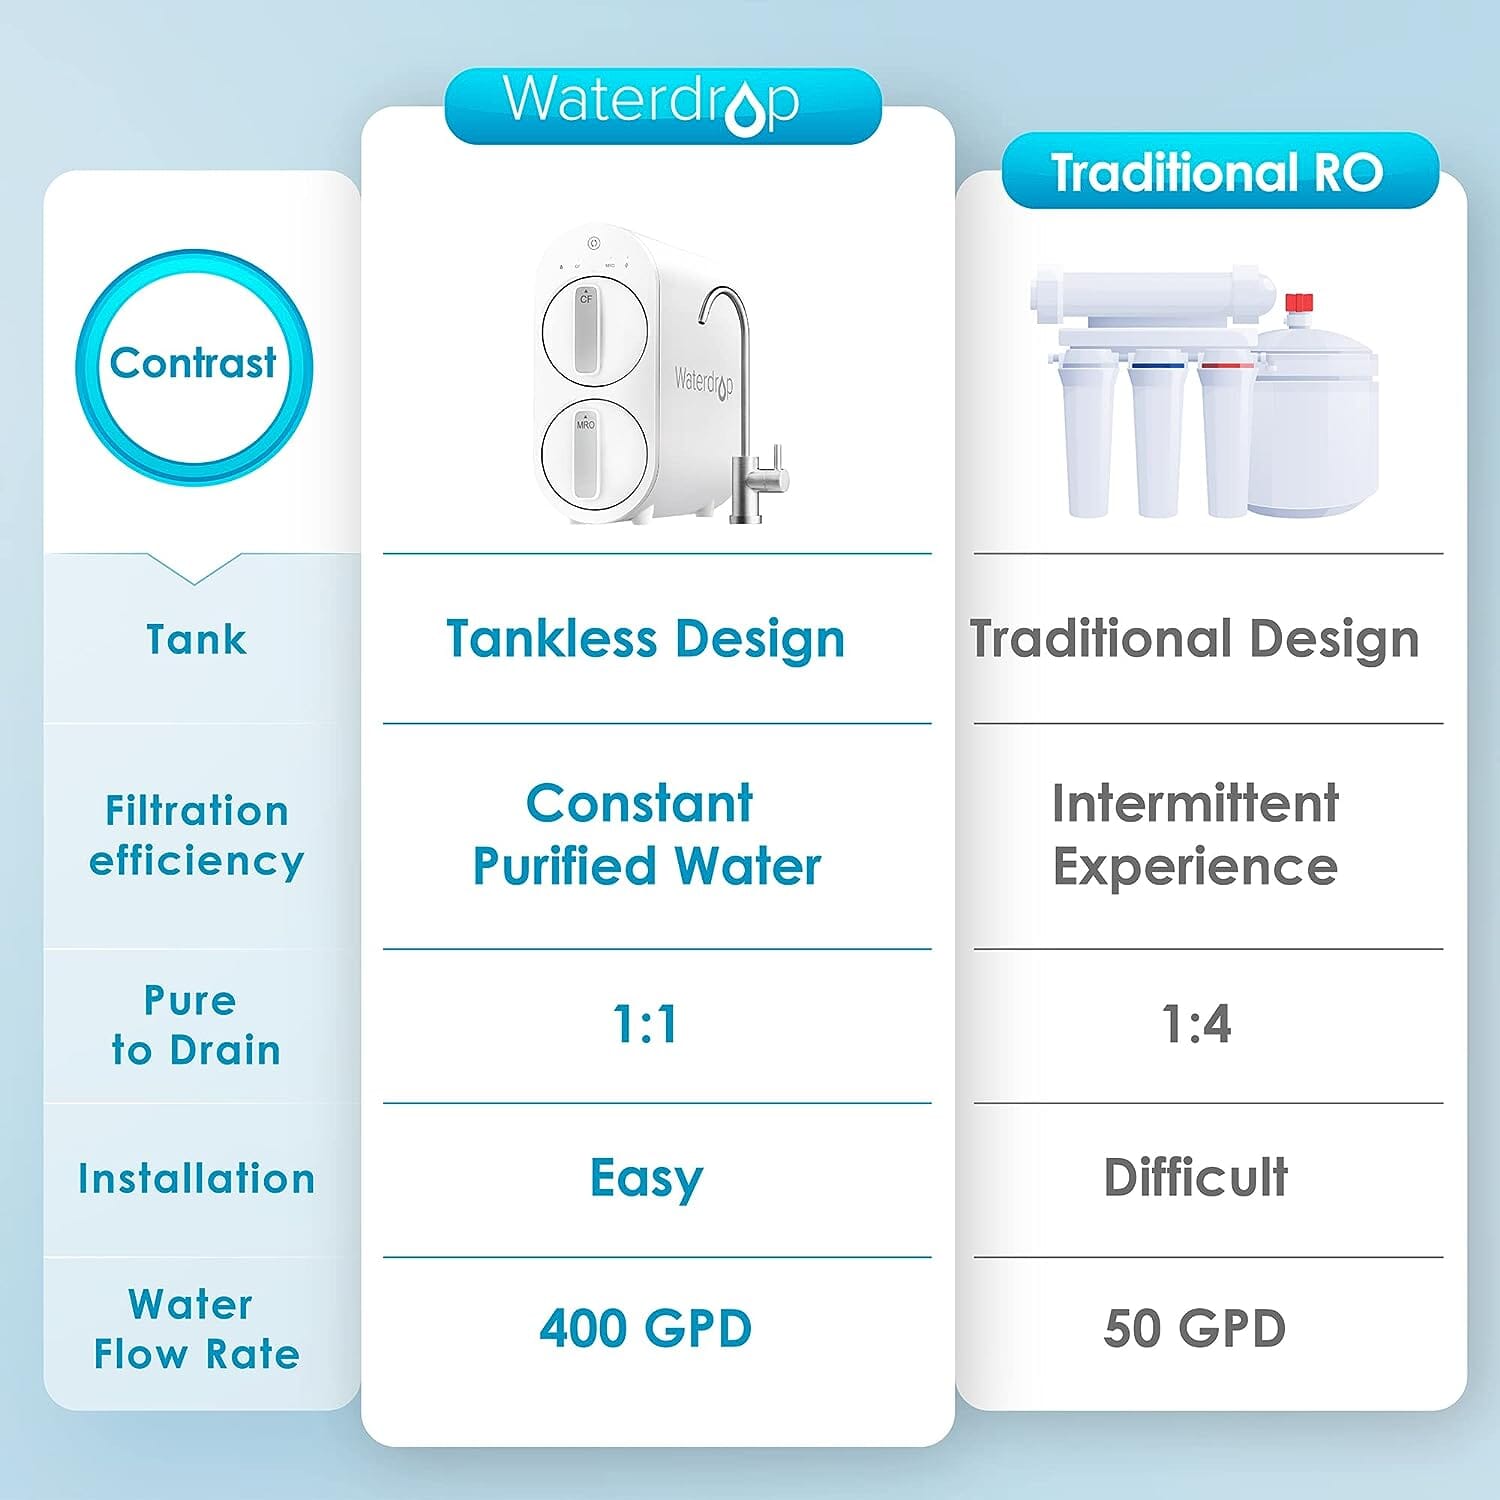 Waterdrop Tankless Reverse Osmosis System, G2